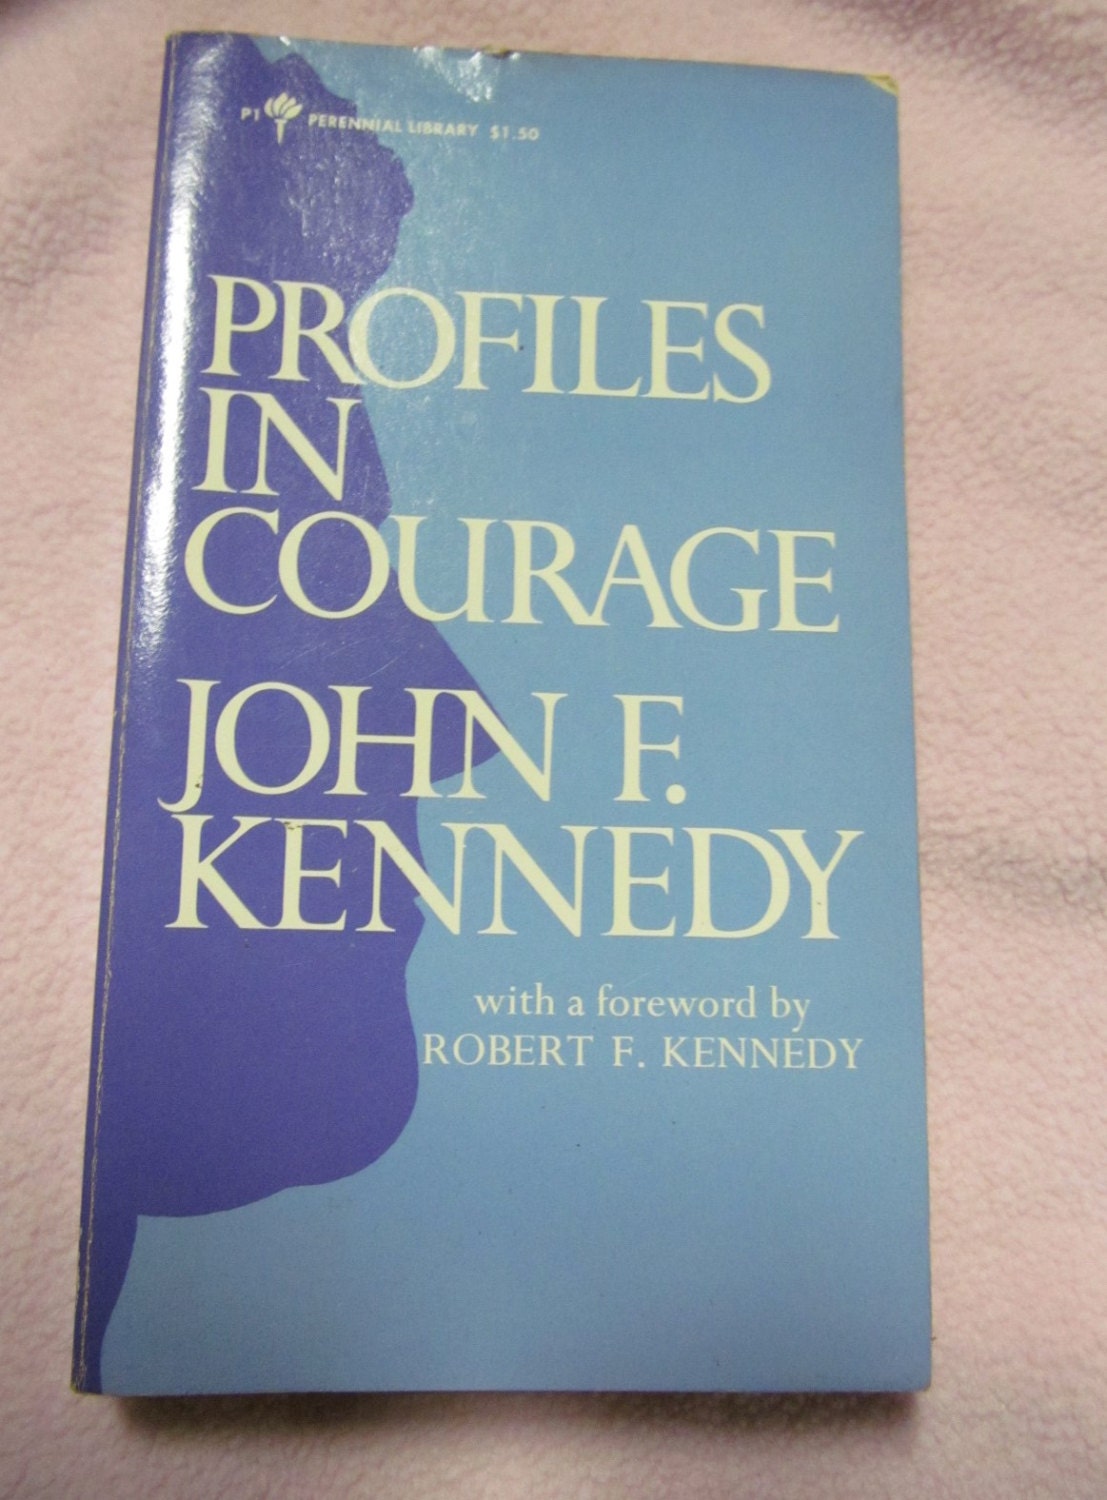 jfk courage book